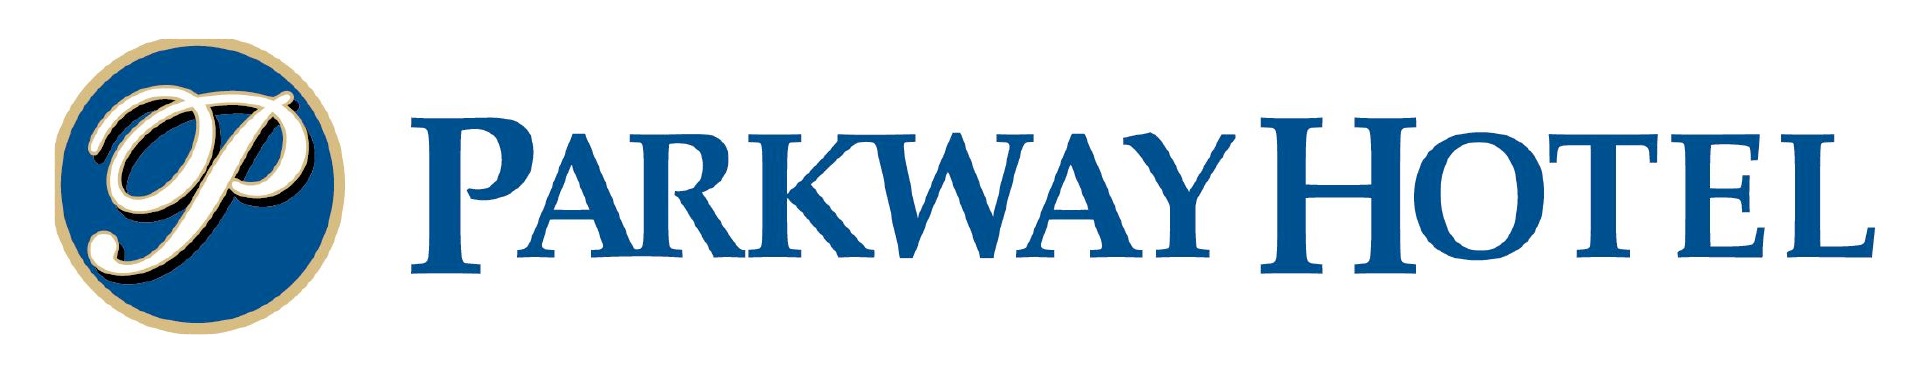 parkway hotel logo